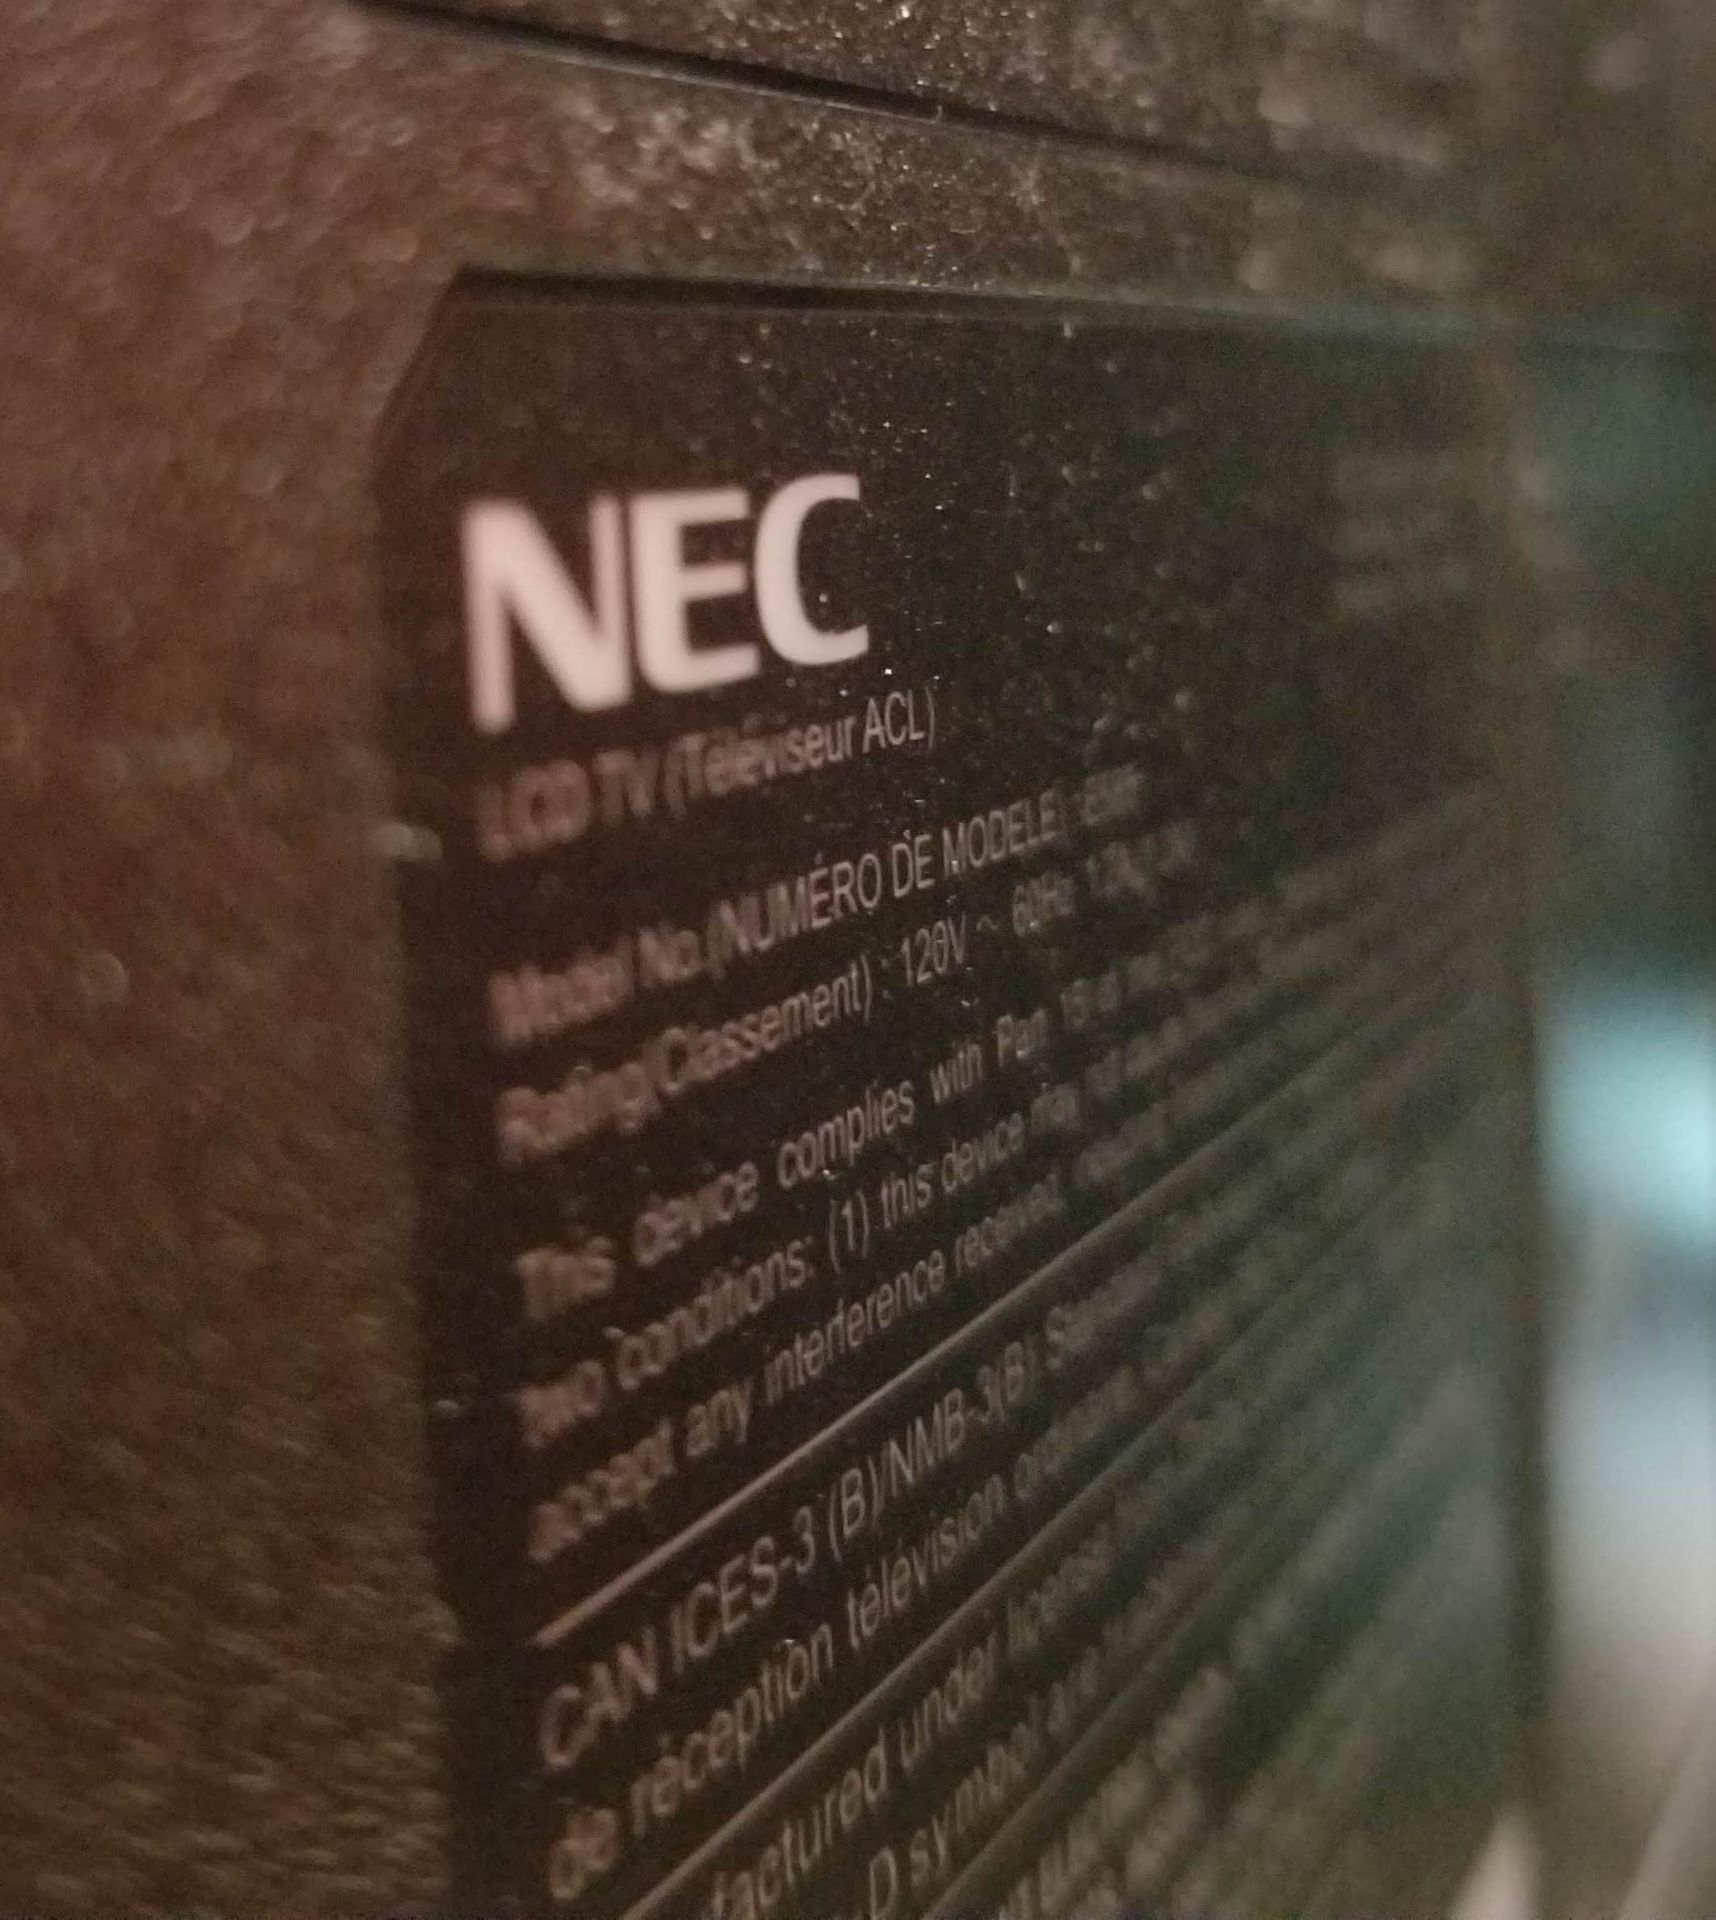 NEC - E585 LED BACKLIT DISPLAY W/ WALL MOUNT - Image 3 of 5